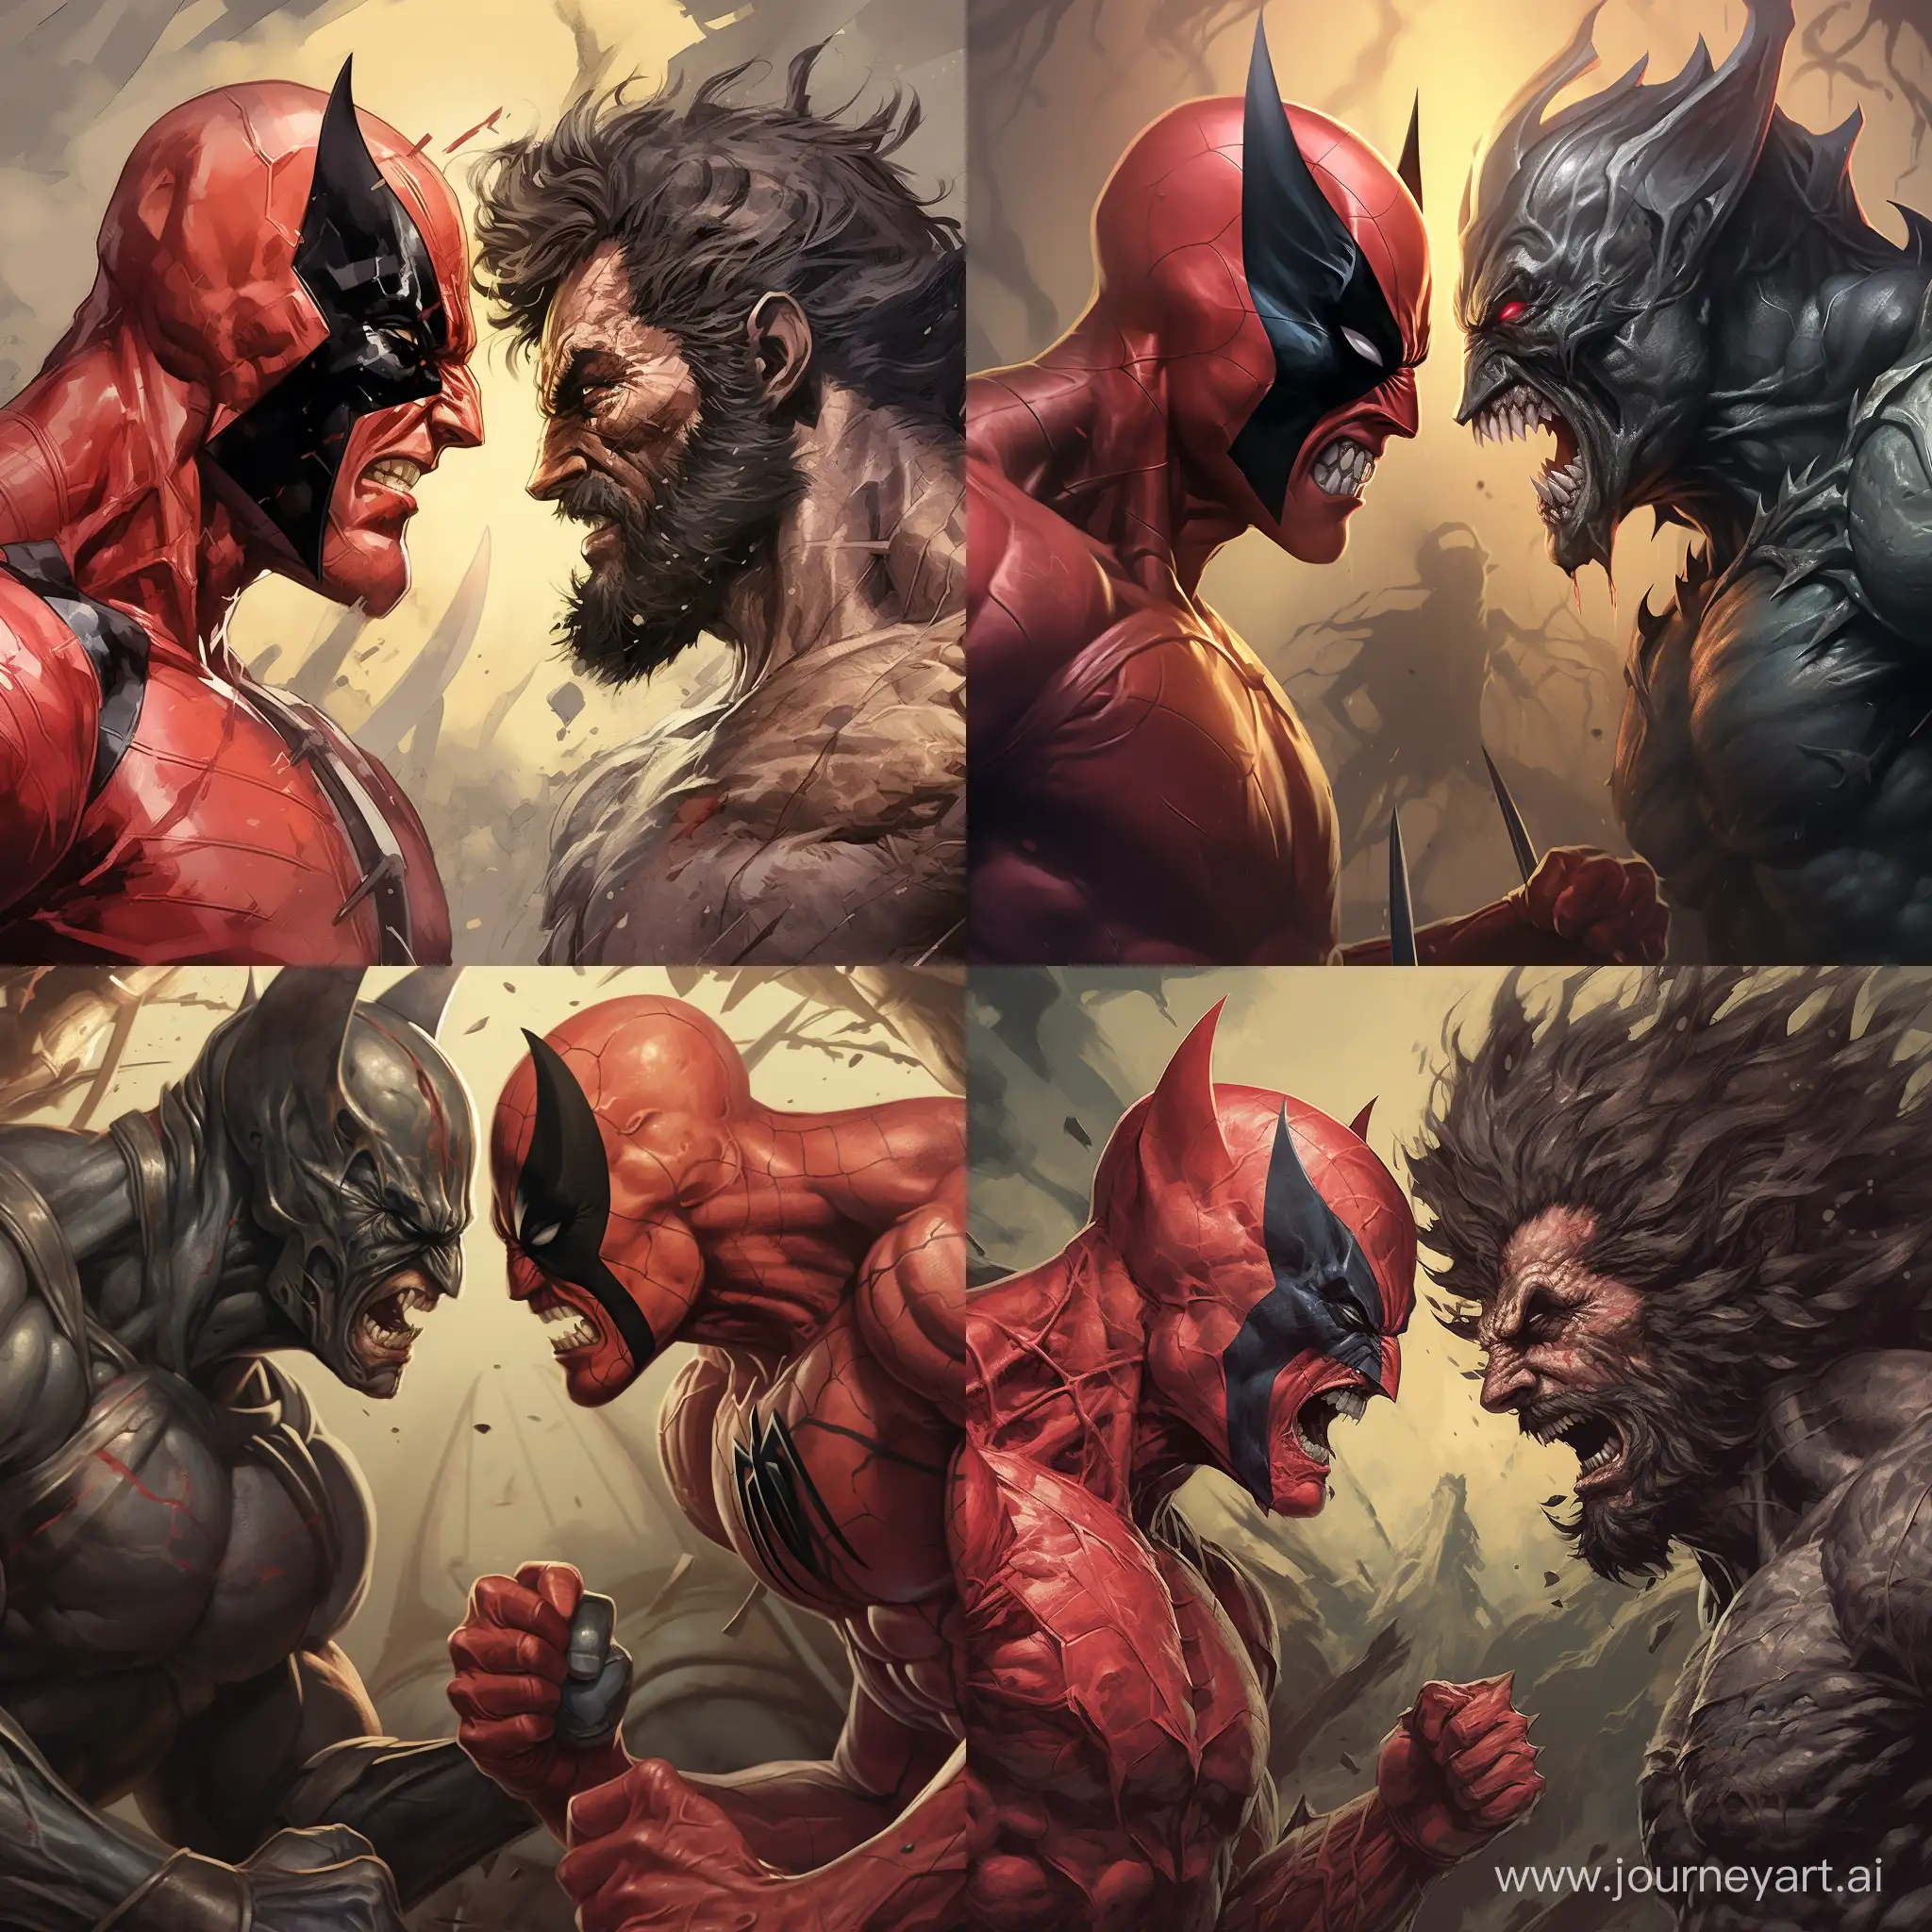 Epic-Deadpool-vs-Wolverine-Showdown-Intense-11-Battle